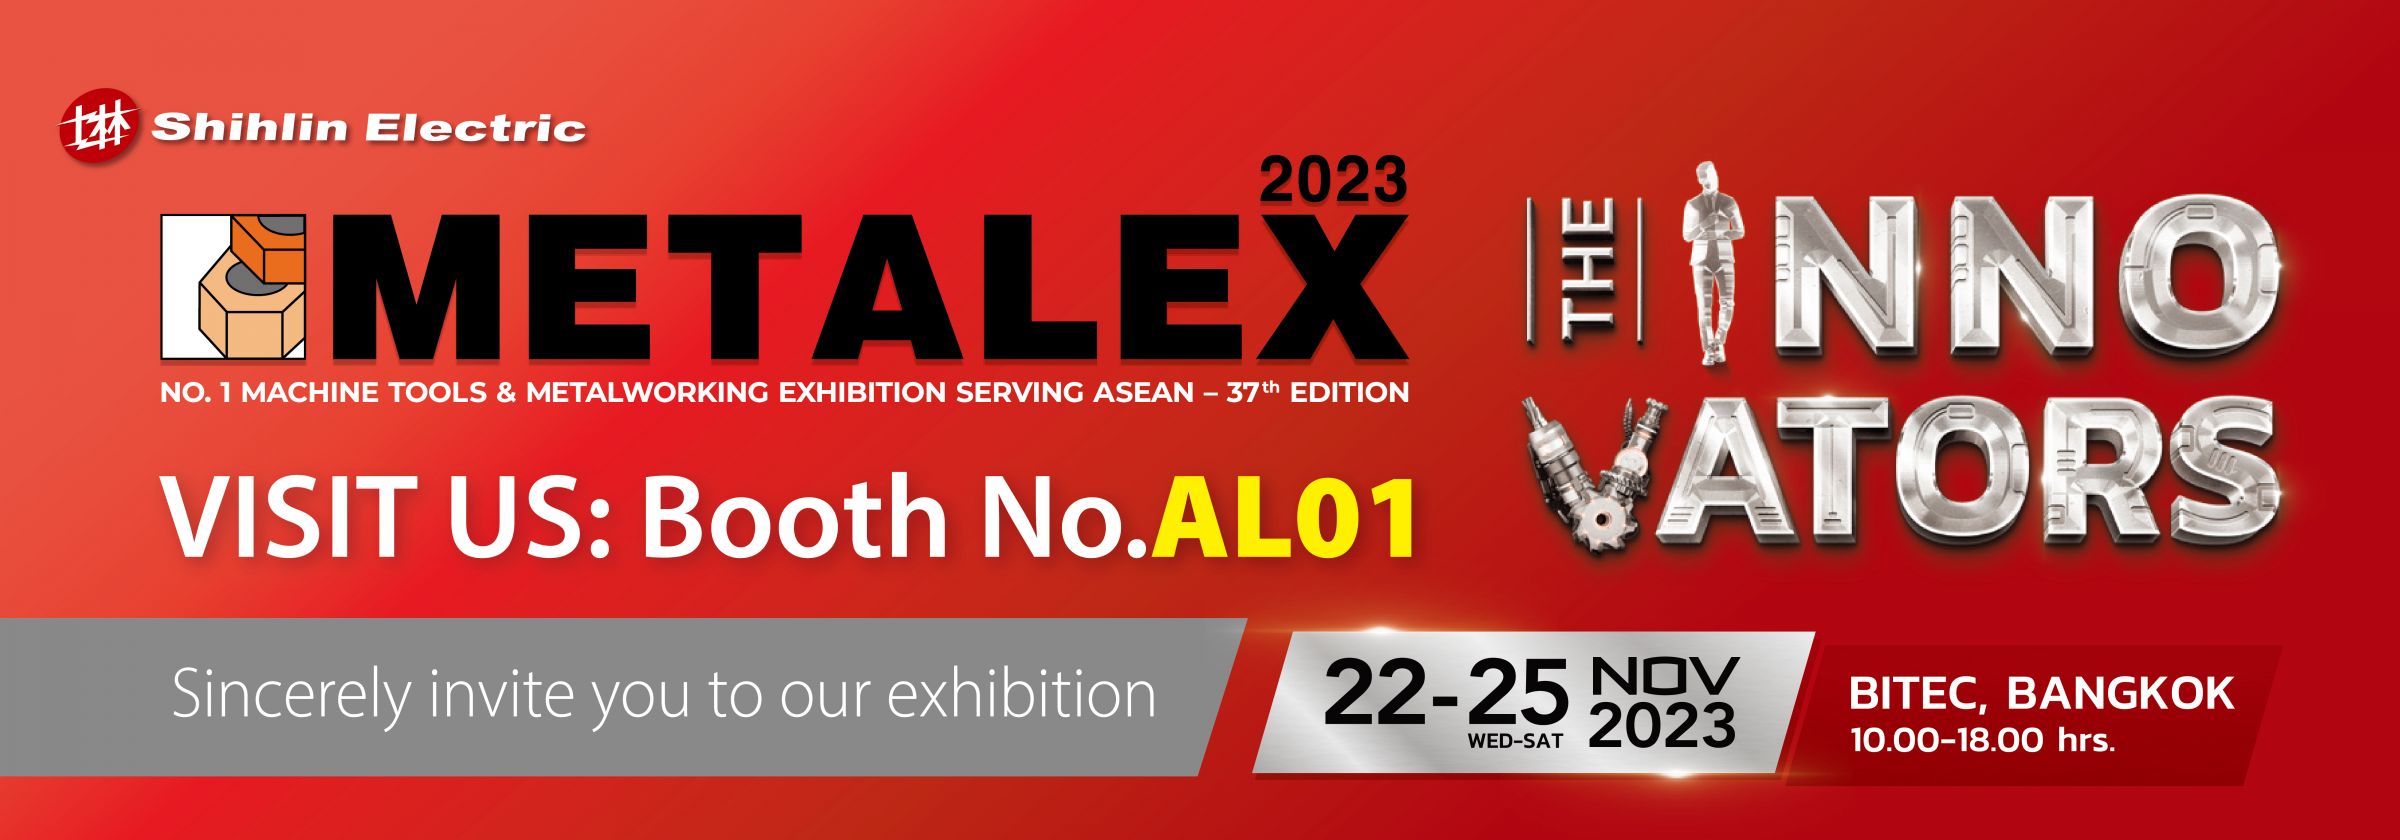 2023 Metalex Exhibition